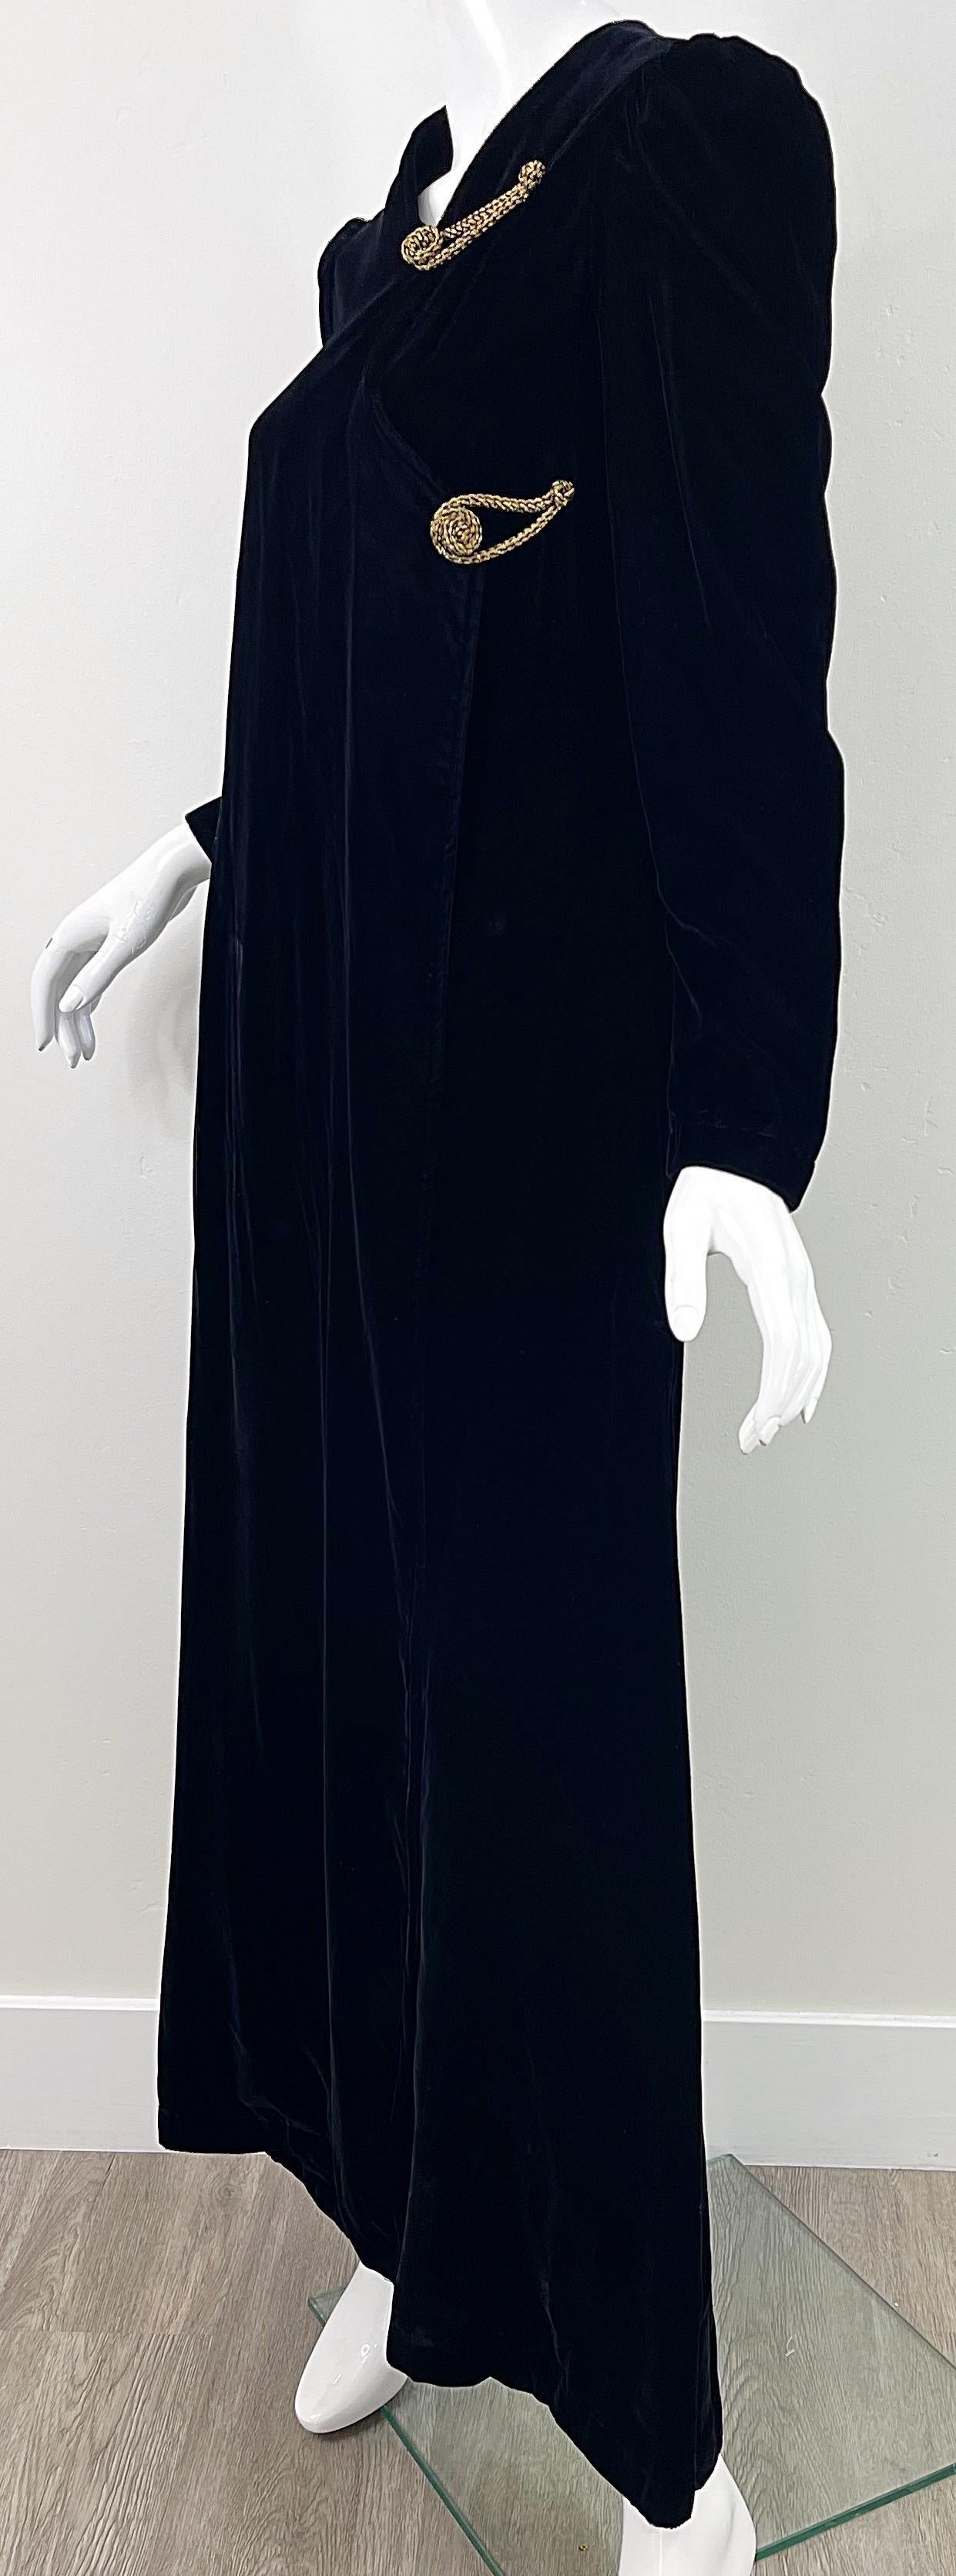 NWT 1980s Sabeth Row Saks 5th Avenue Black Silk Velvet Vintage Wrap Robe Dress For Sale 2